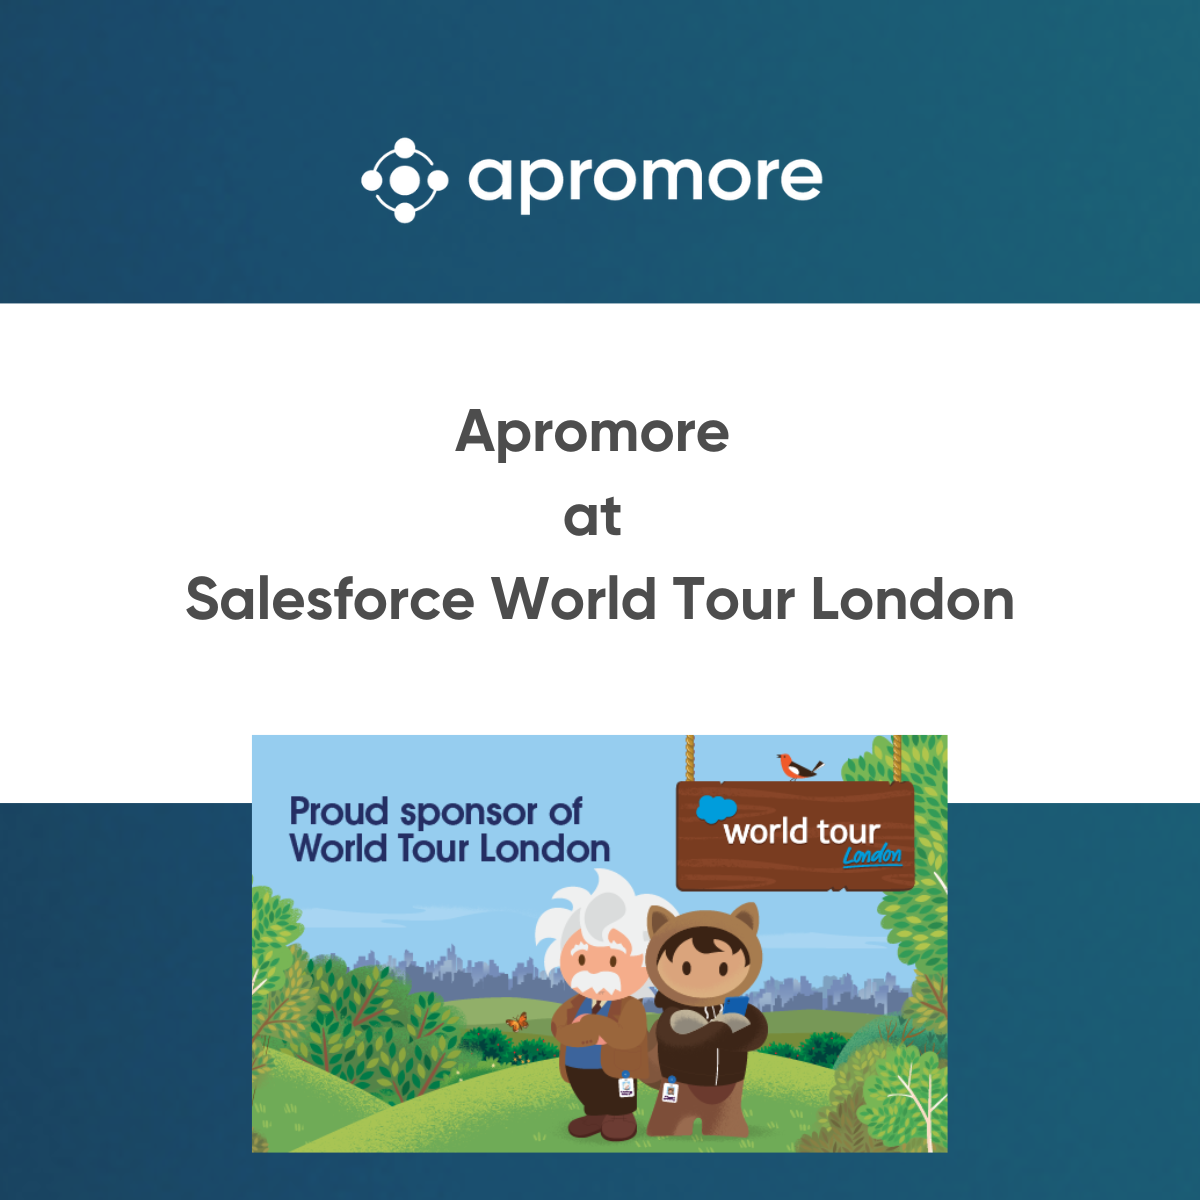 Apromore at Salesforce World Tour London